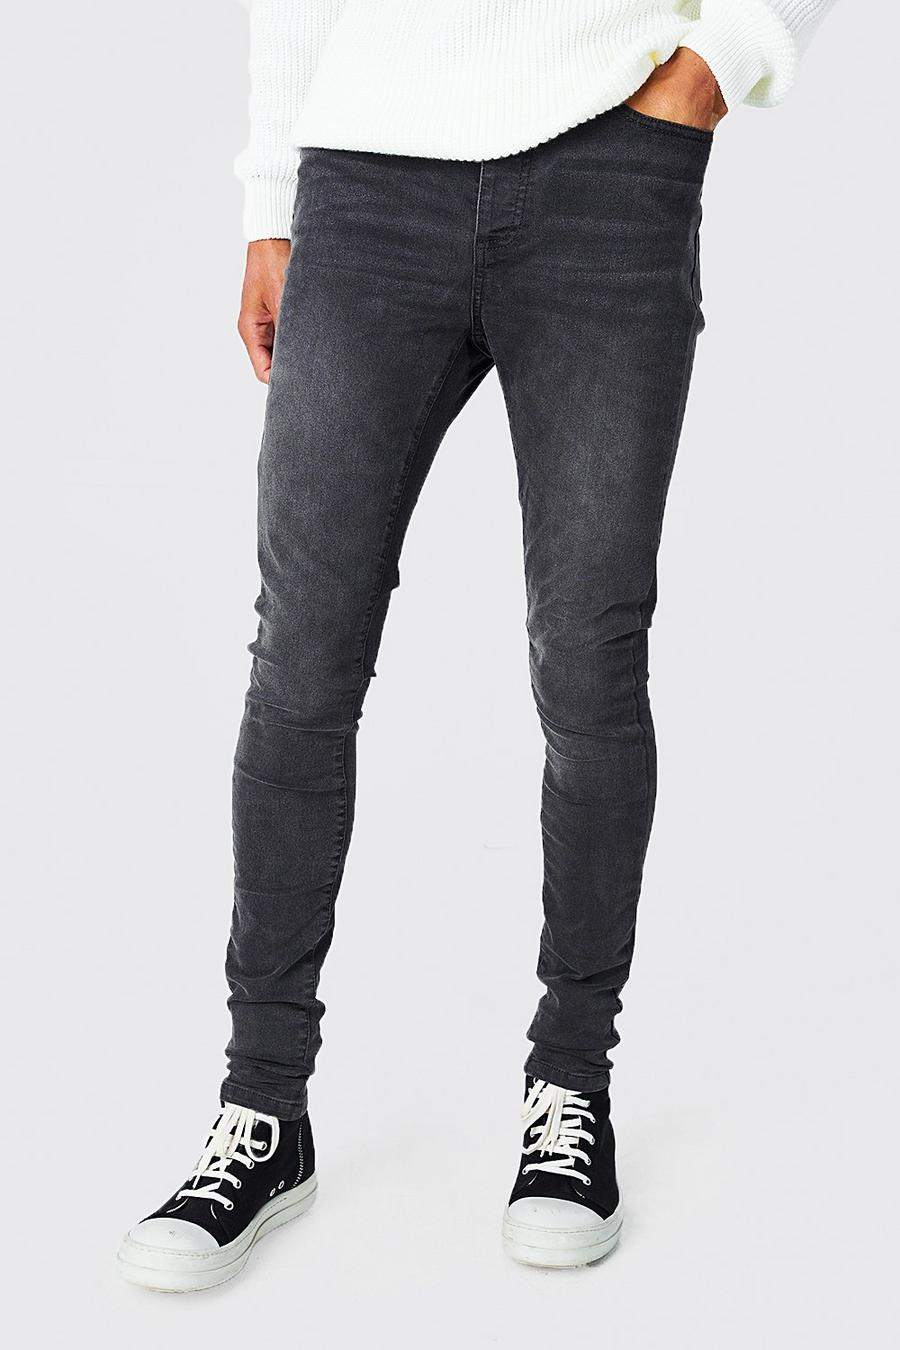 Charcoal grey Tall Skinny Stretch Jean